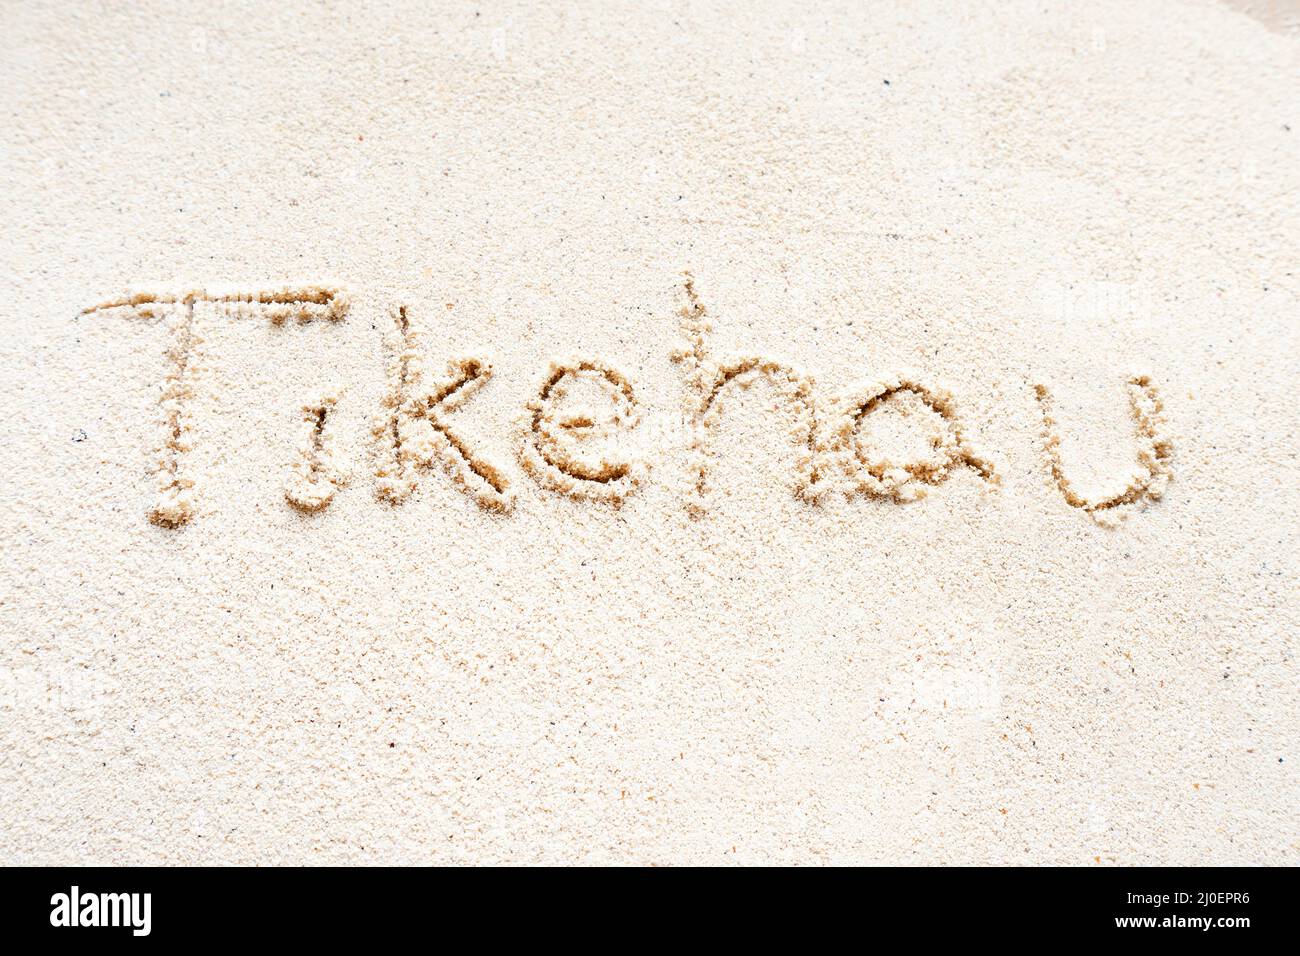 Handwriting words 'Tikehau' on sand of beach Stock Photo